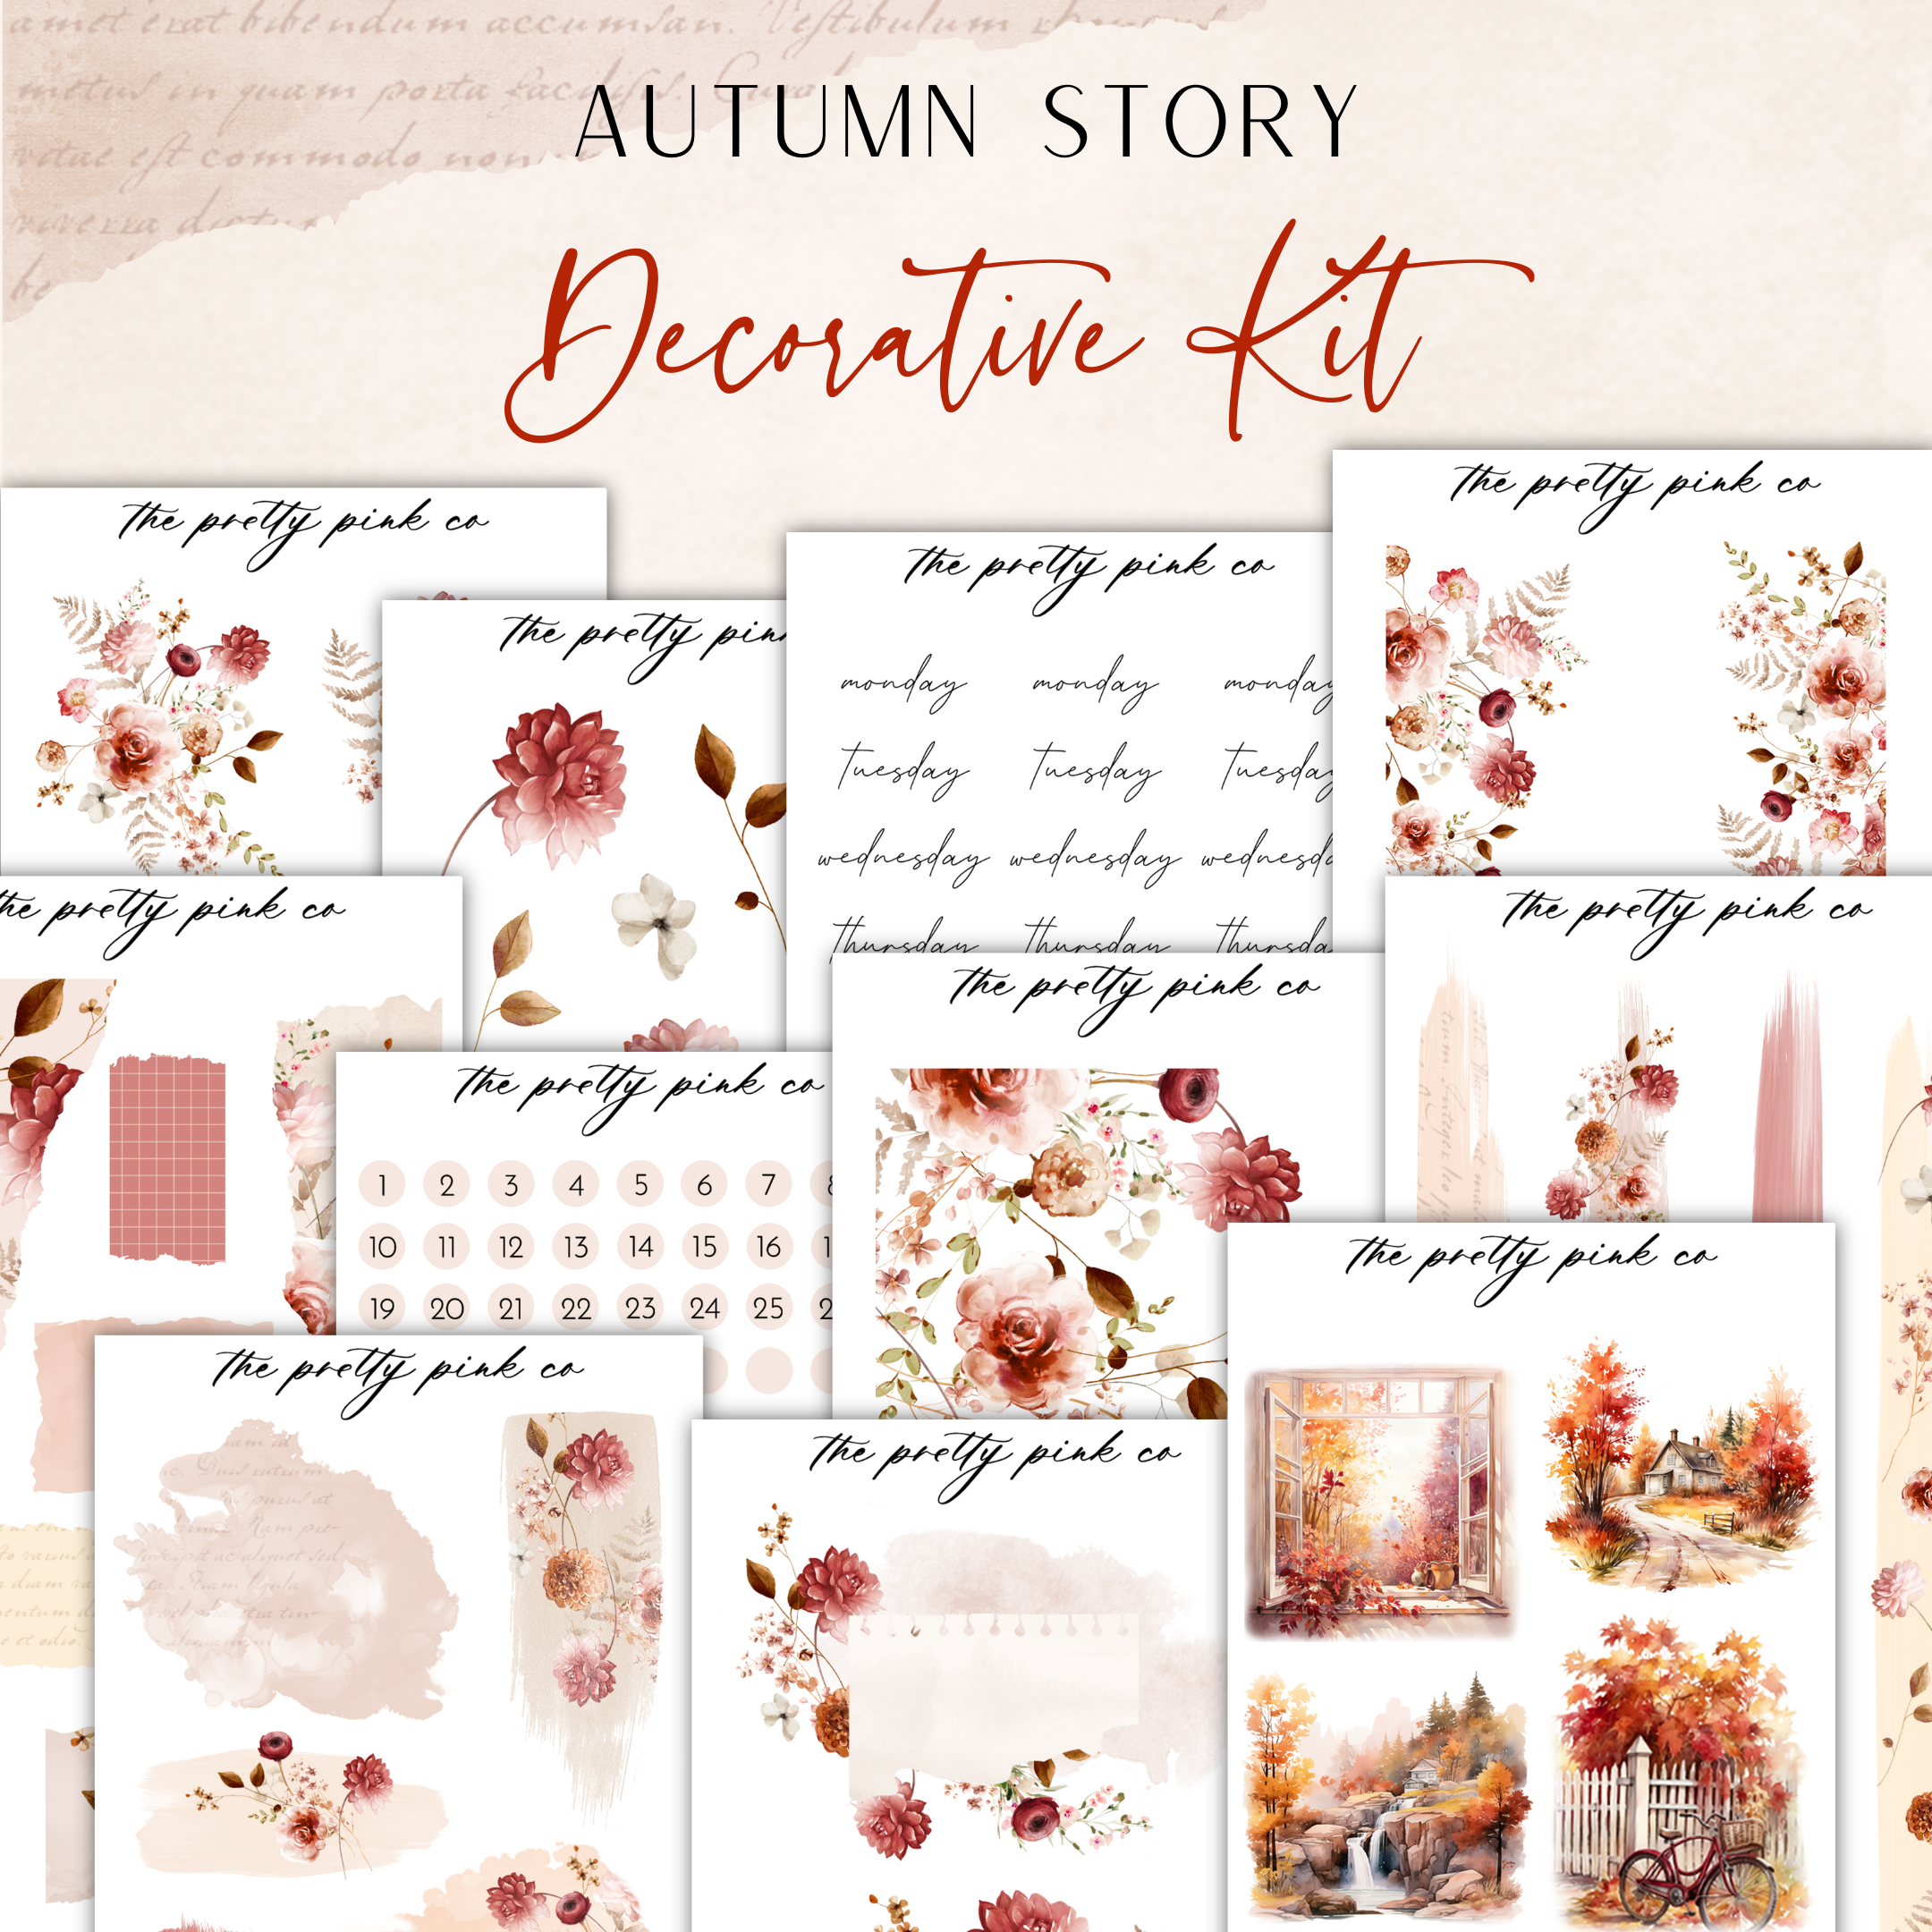 Autumn Story | Decorative Kit